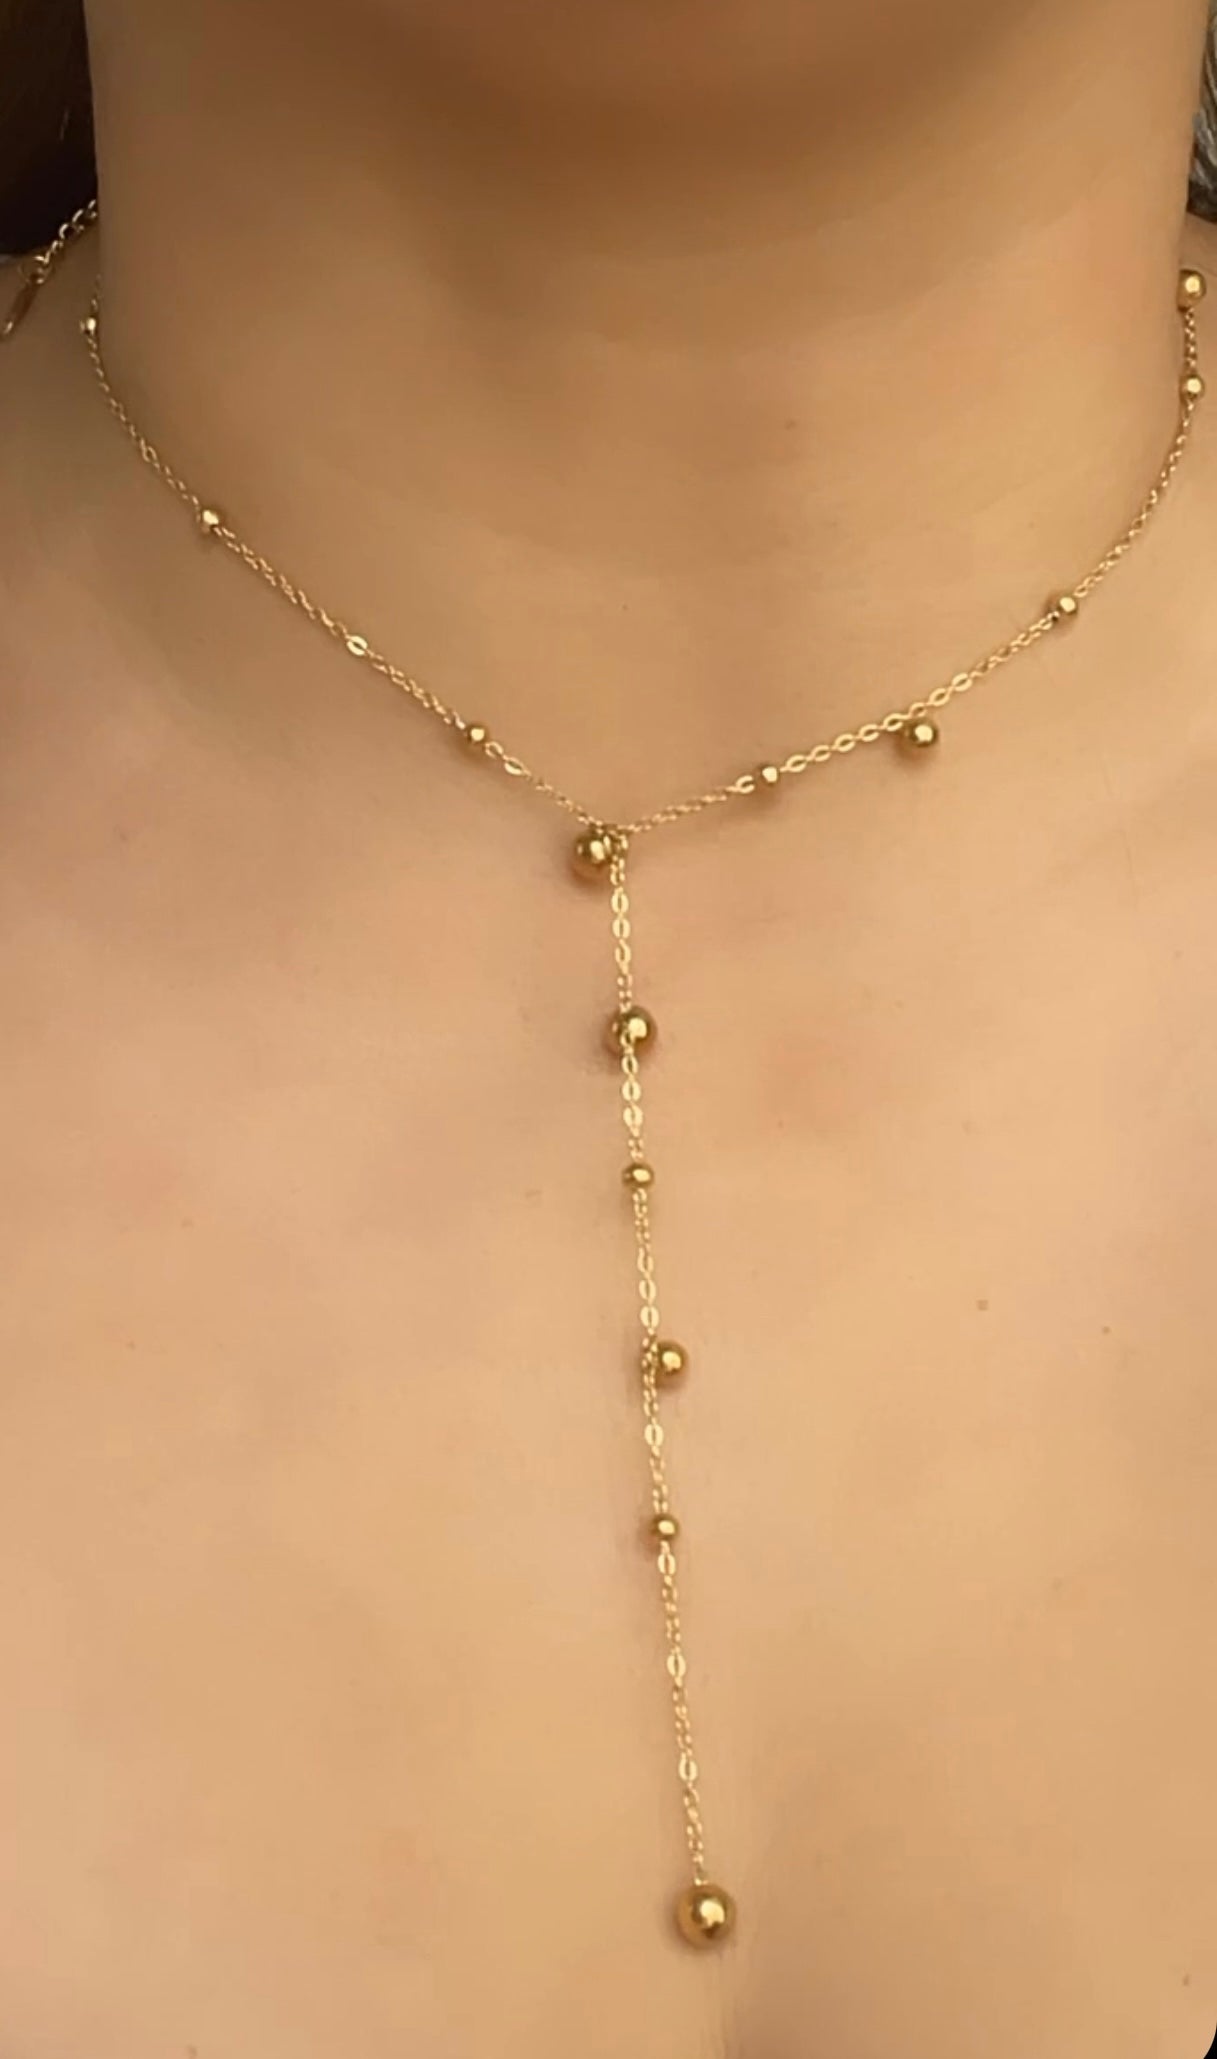 Delicate necklace